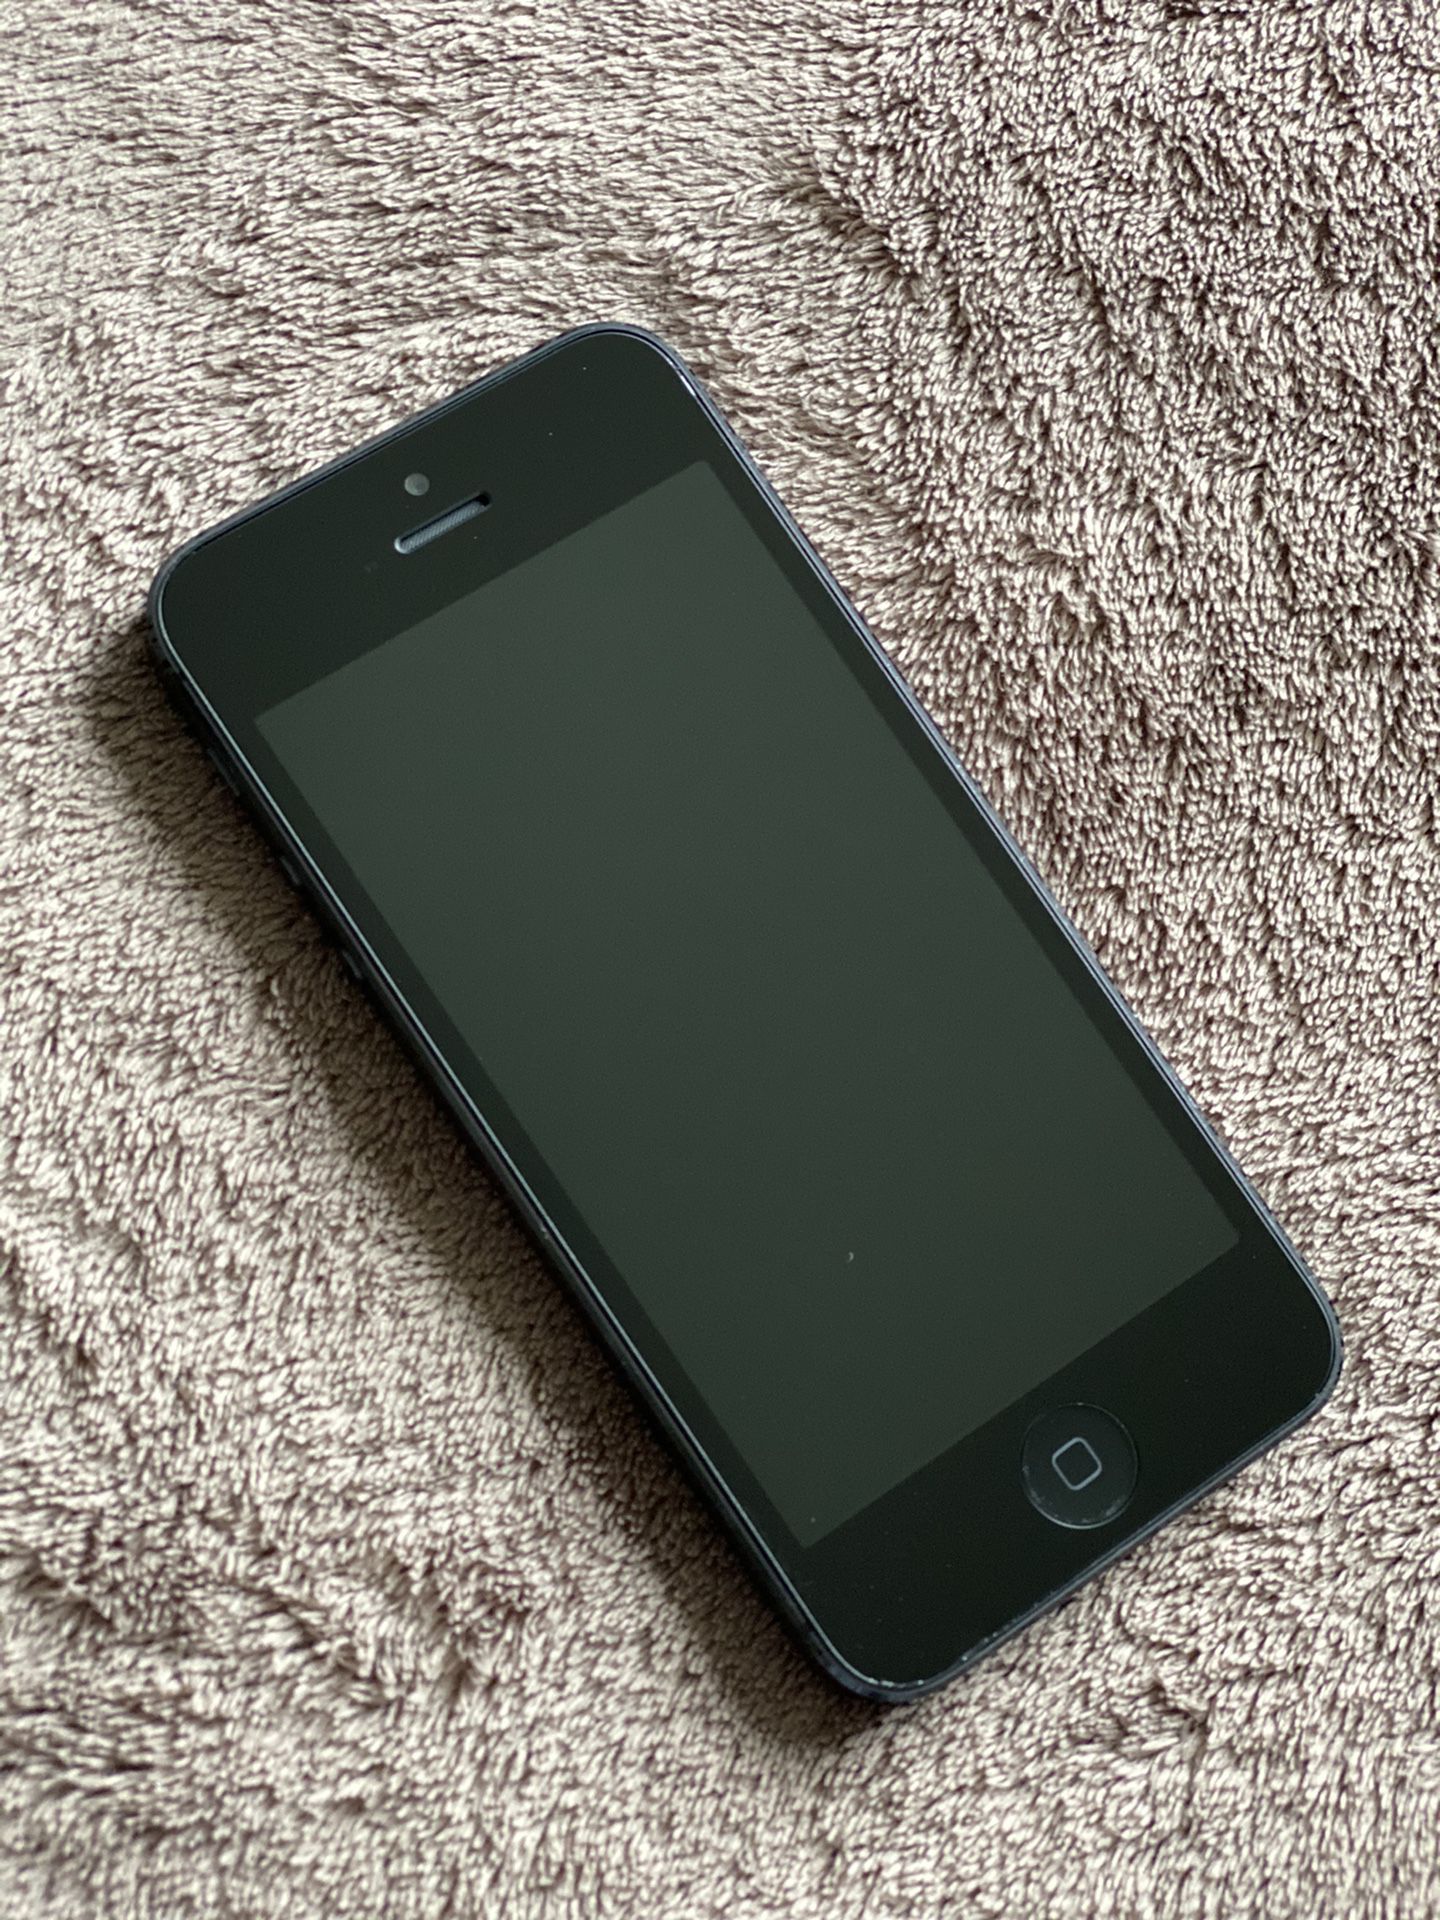 iPhone 5, 16 GB factory unlocked